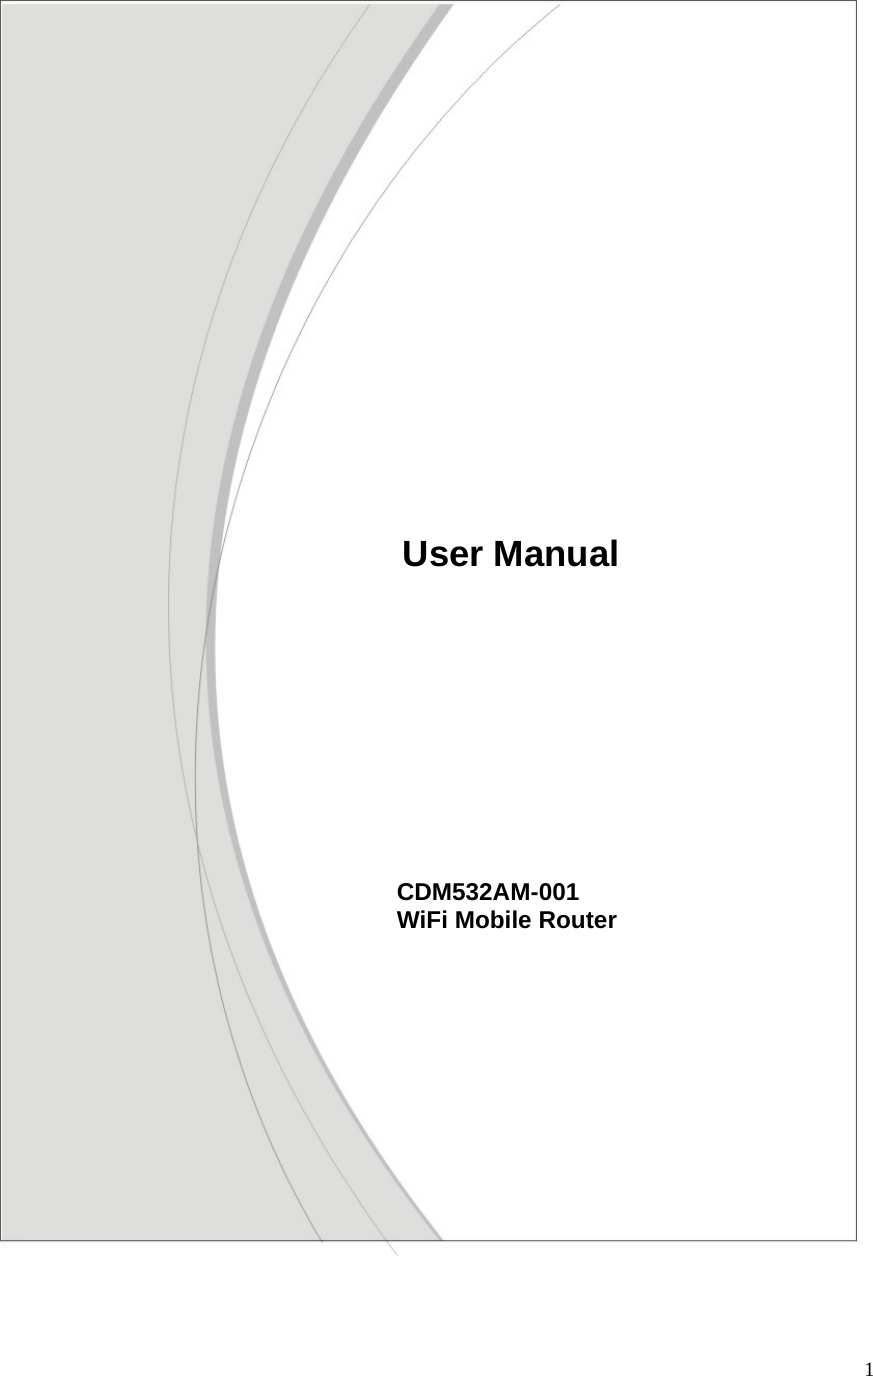  1                                                                                                   CDM532AM-001 WiFi Mobile Router              User Manual 